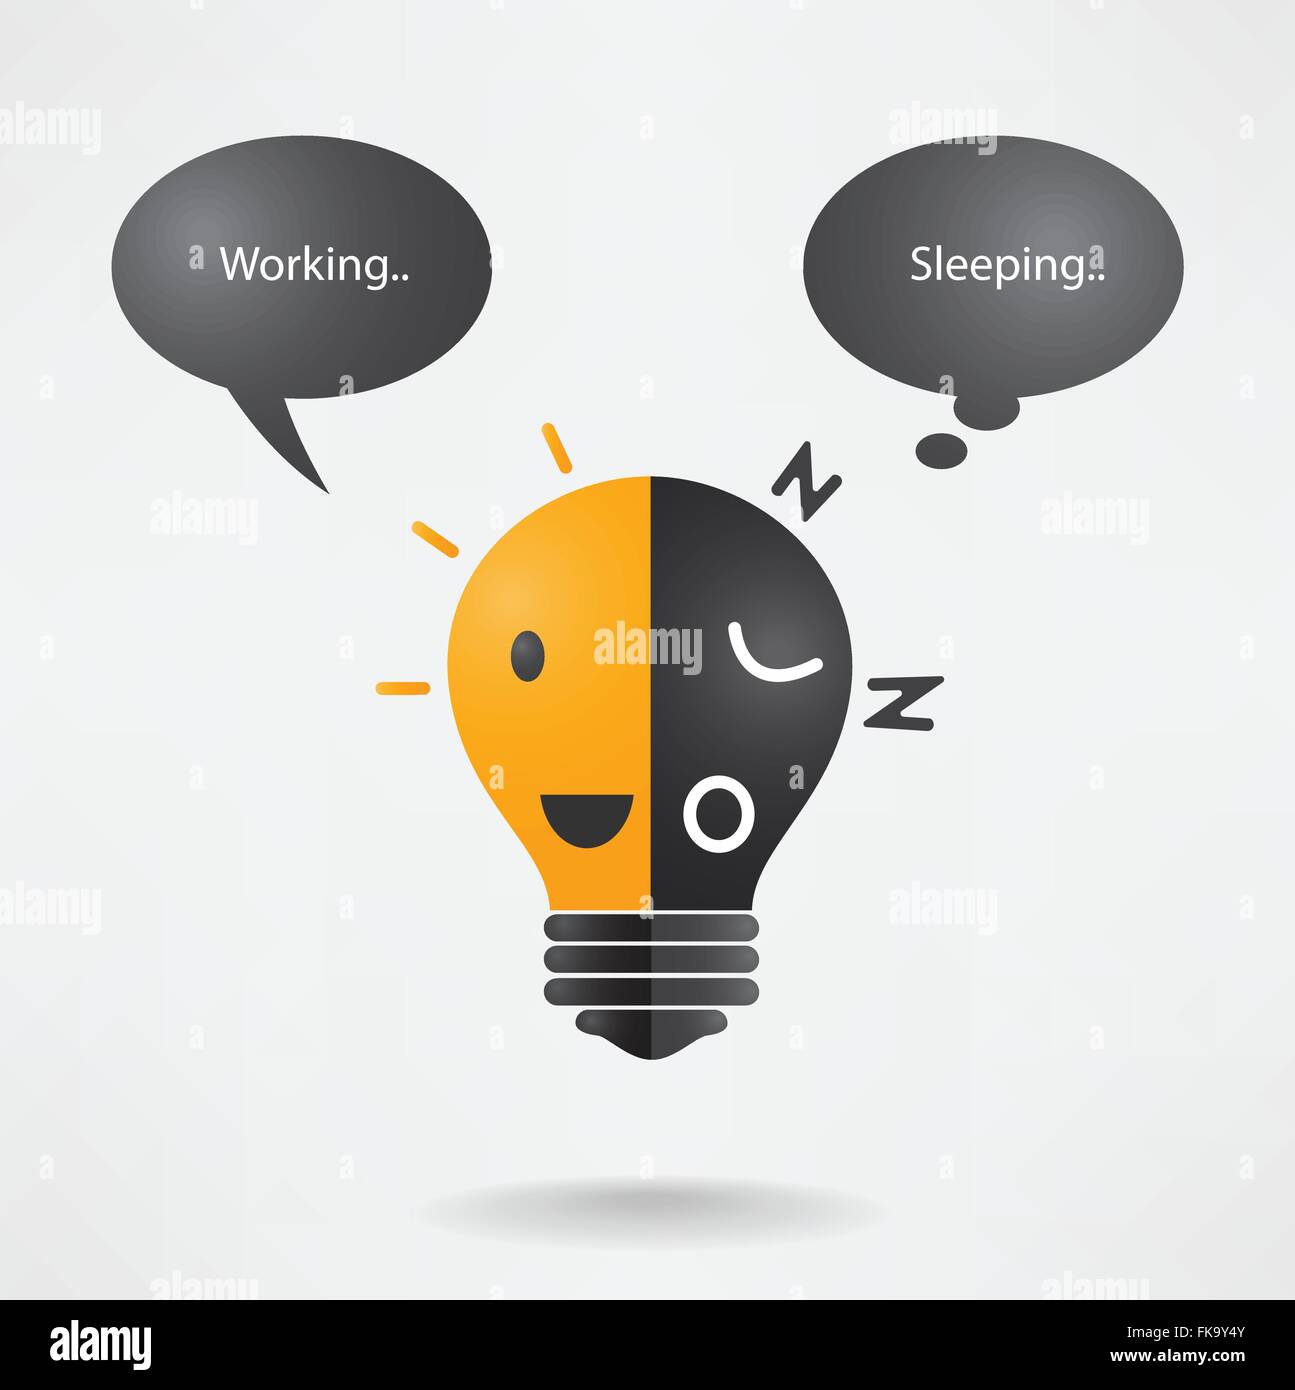 kreative Glühbirne Idee, Idee-Balance-Konzept, Geschäftsidee, positives Denken, Bildung sign.vector Abbildung Stock Vektor